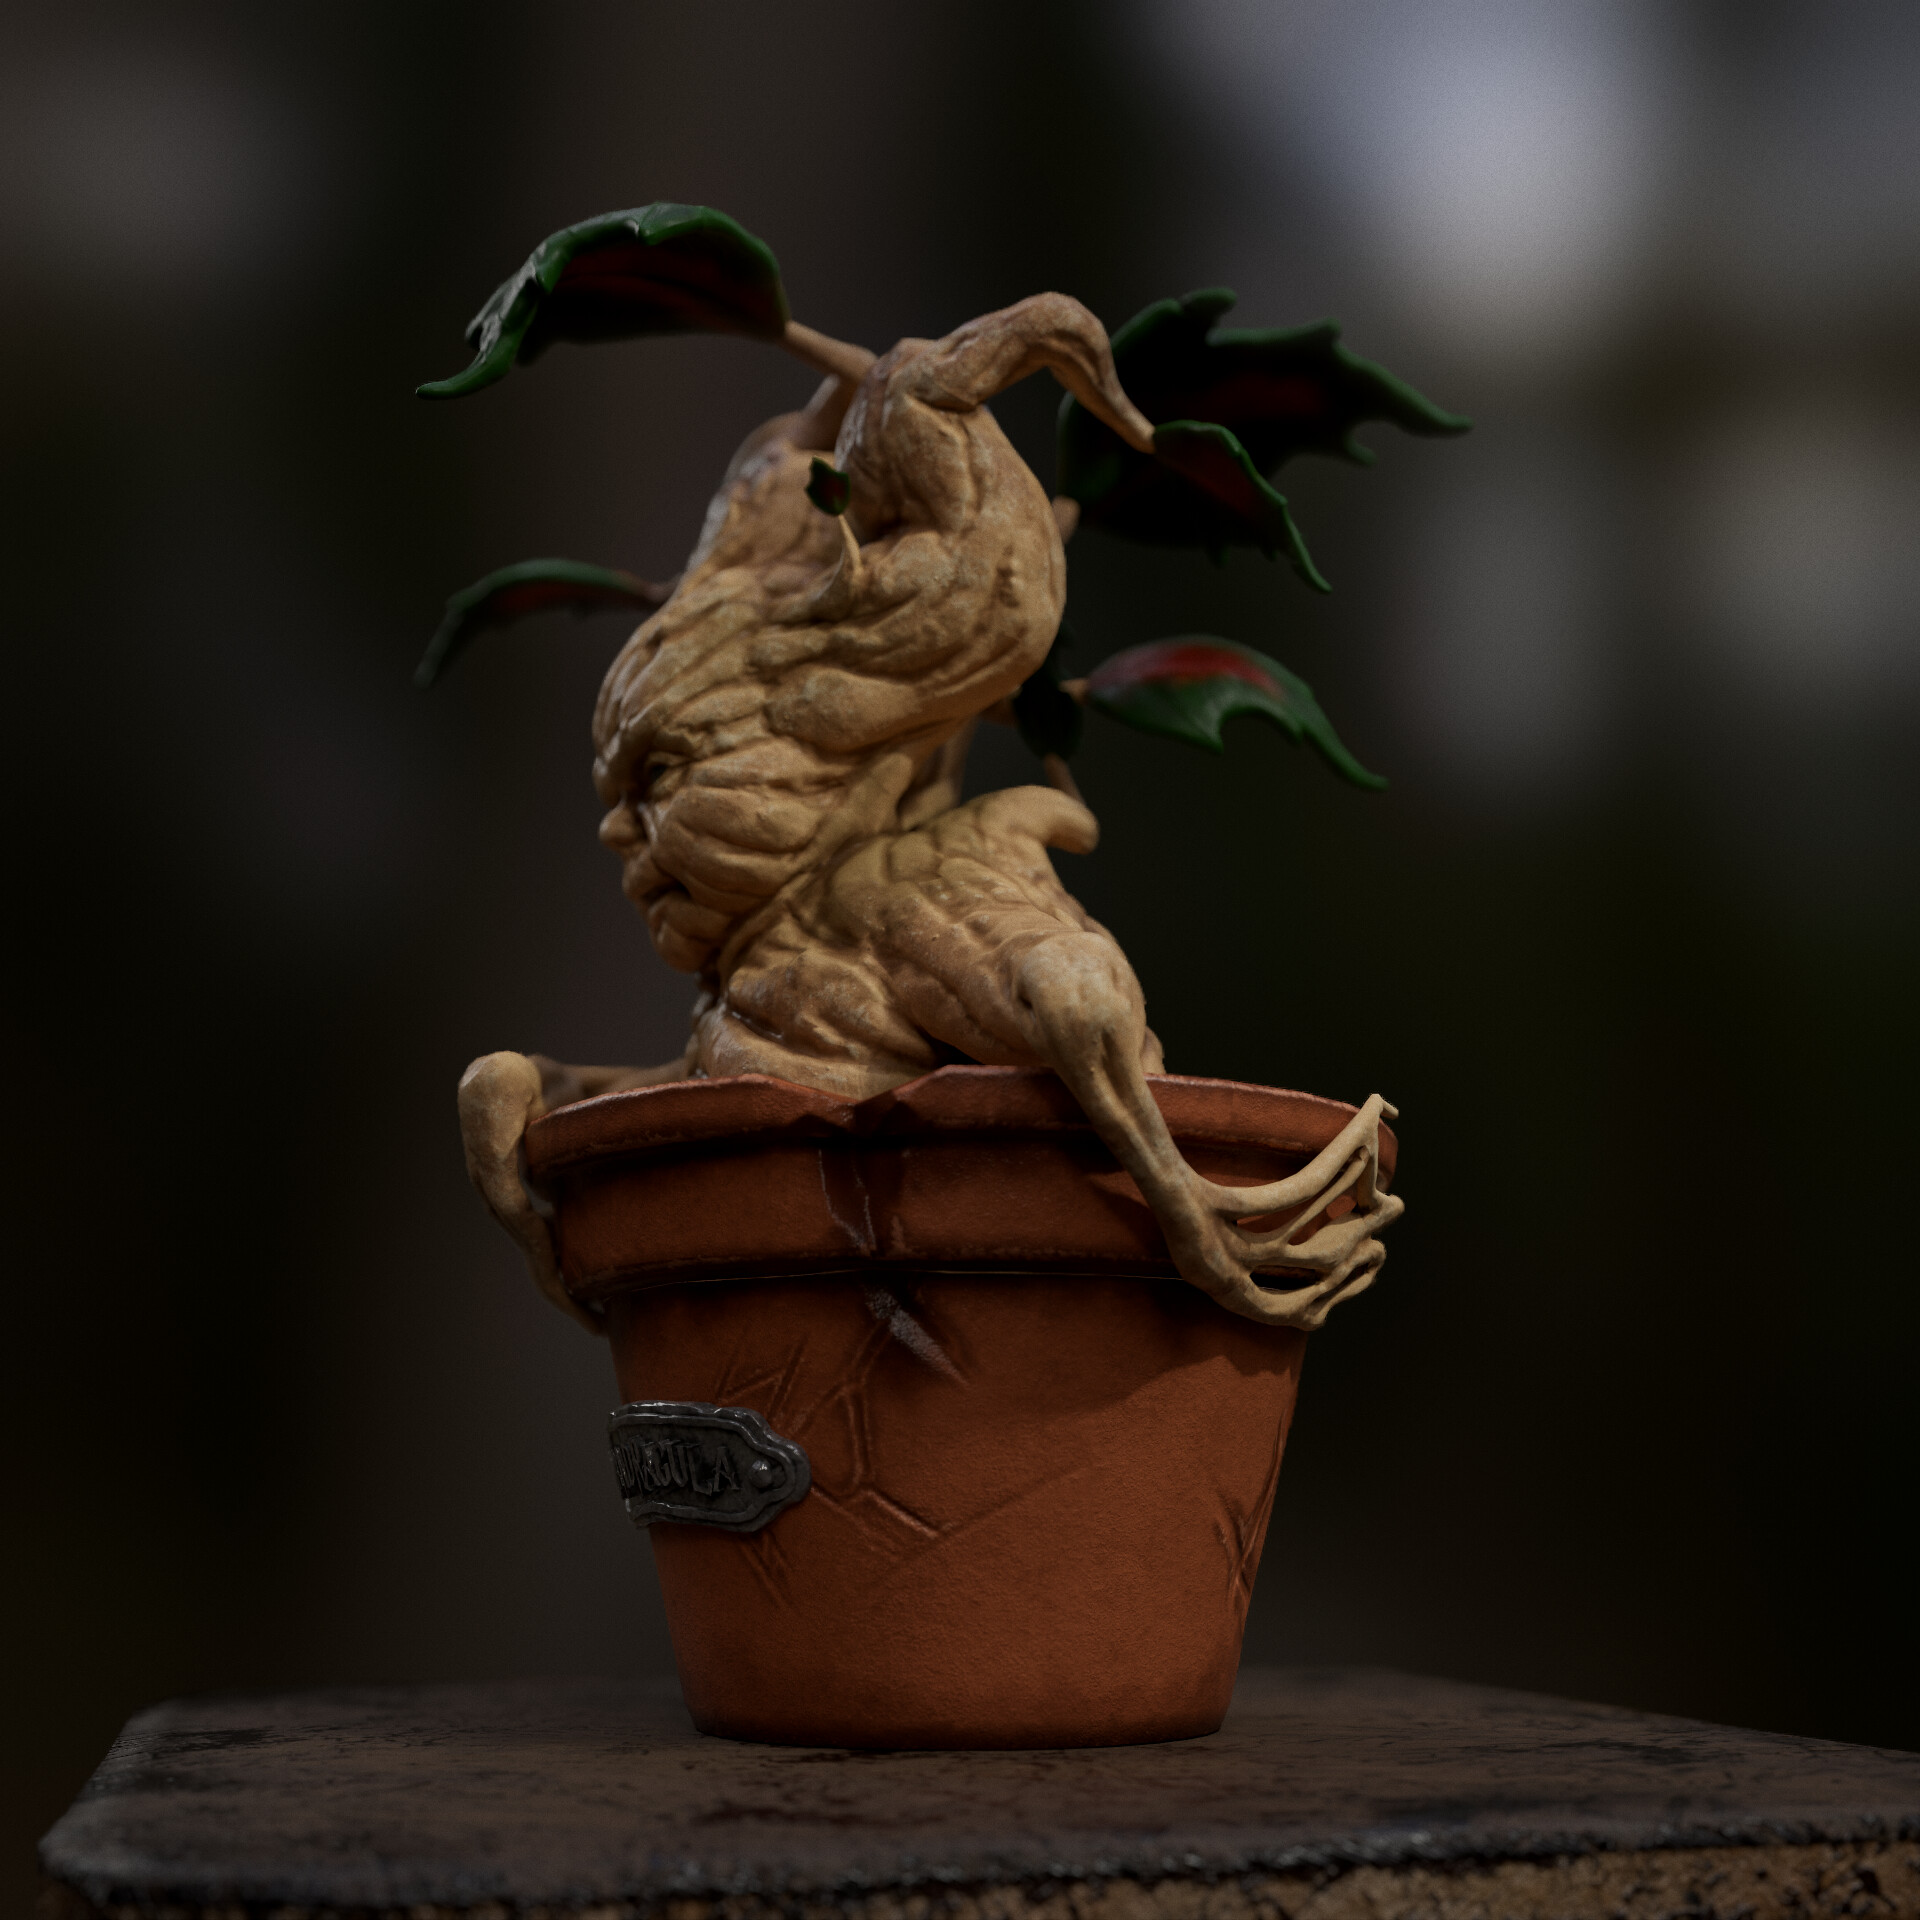 ArtStation - Mandrake